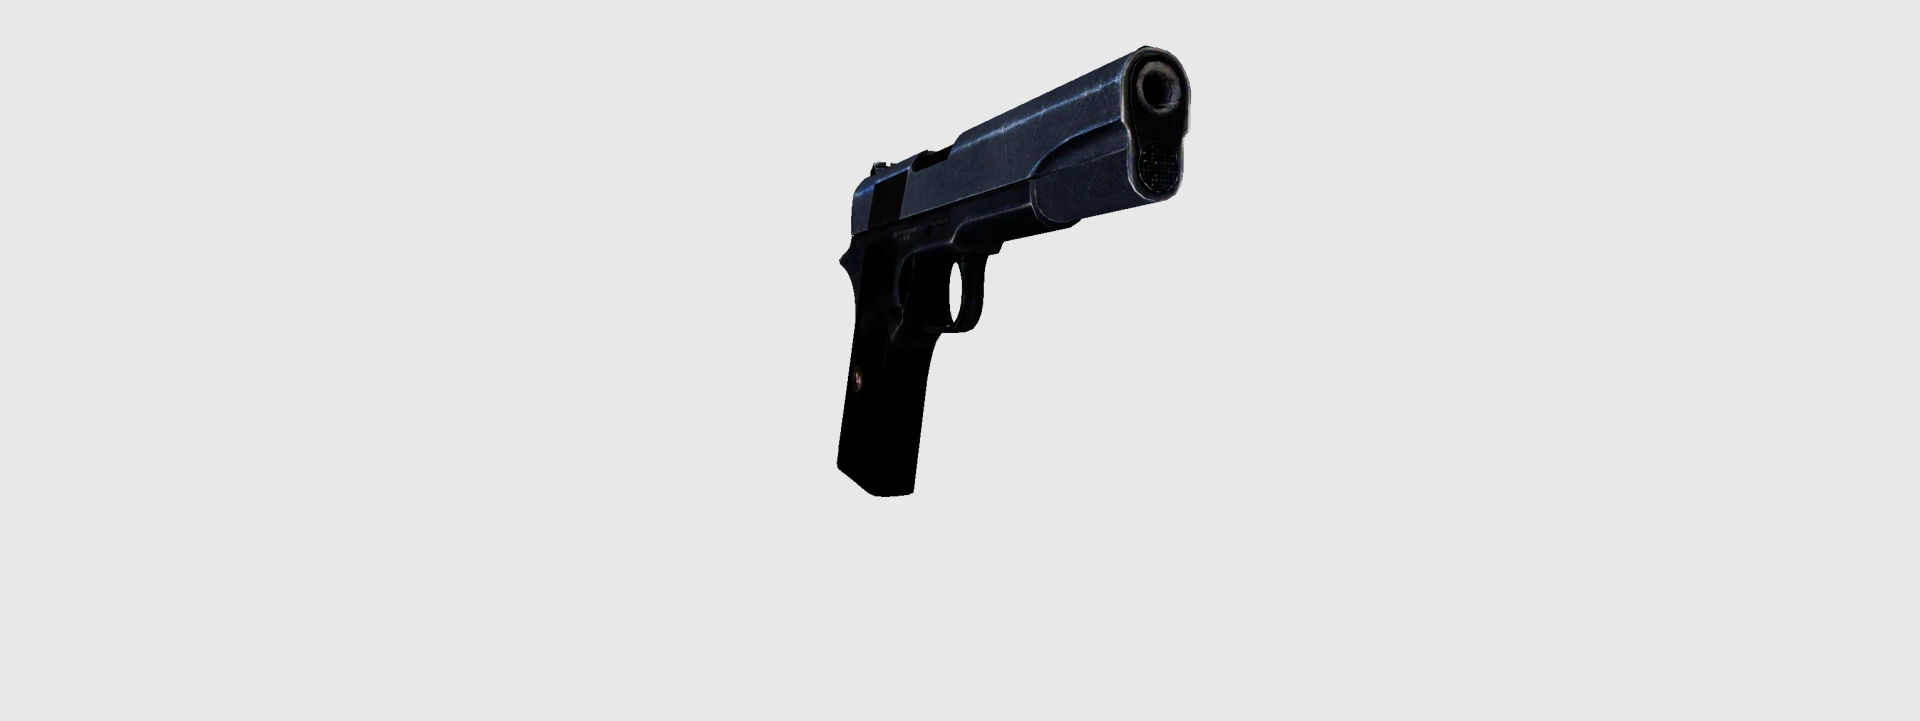 m1911 handgun